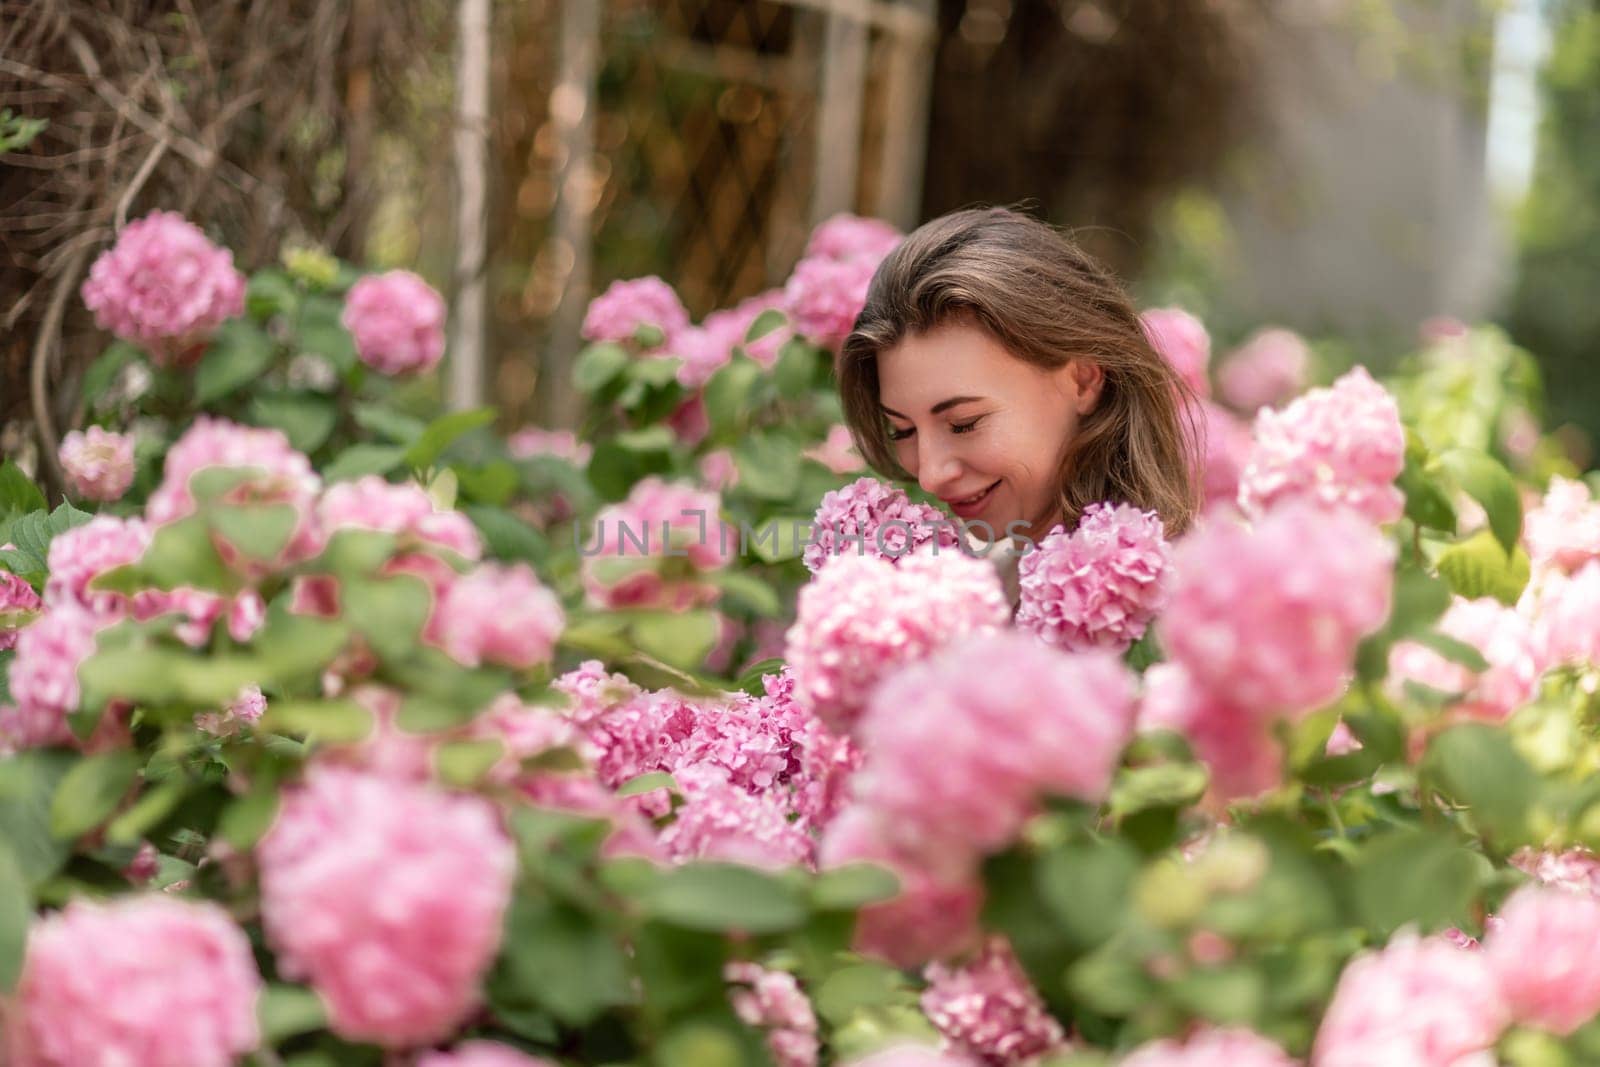 Hydrangeas Happy woman in pink dress amid hydrangeas. Large pink hydrangea caps surround woman. Sunny outdoor setting. Showcasing happy woman amid hydrangea bloom. by Matiunina